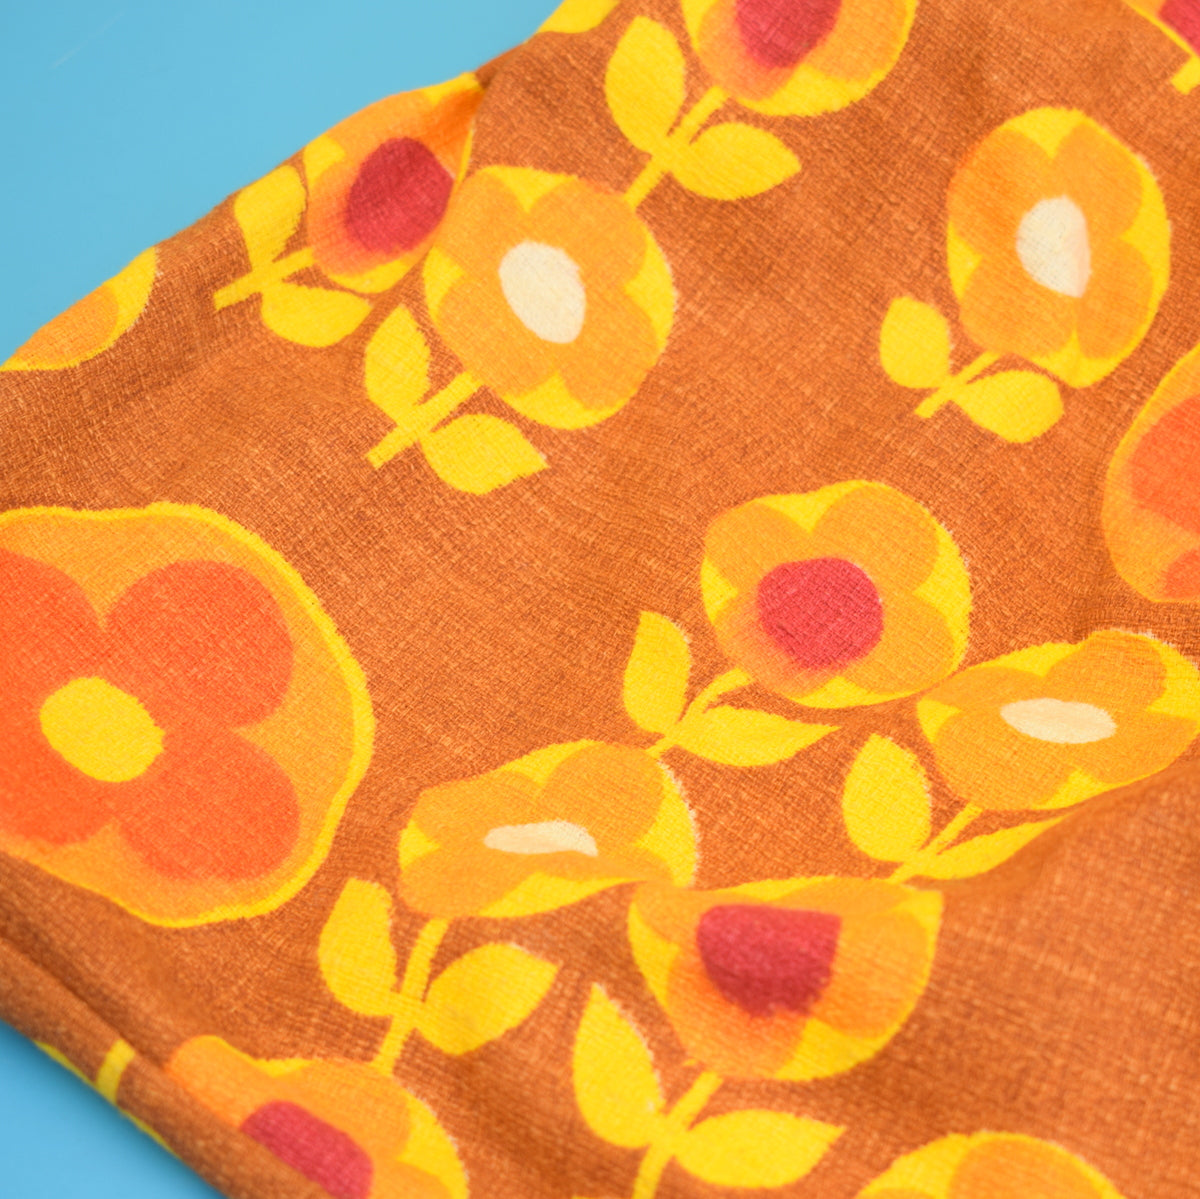 Vintage 1960s Handmade Knitting Bag / Storage Bag - Flower Power - Orange. Yellow & Brown